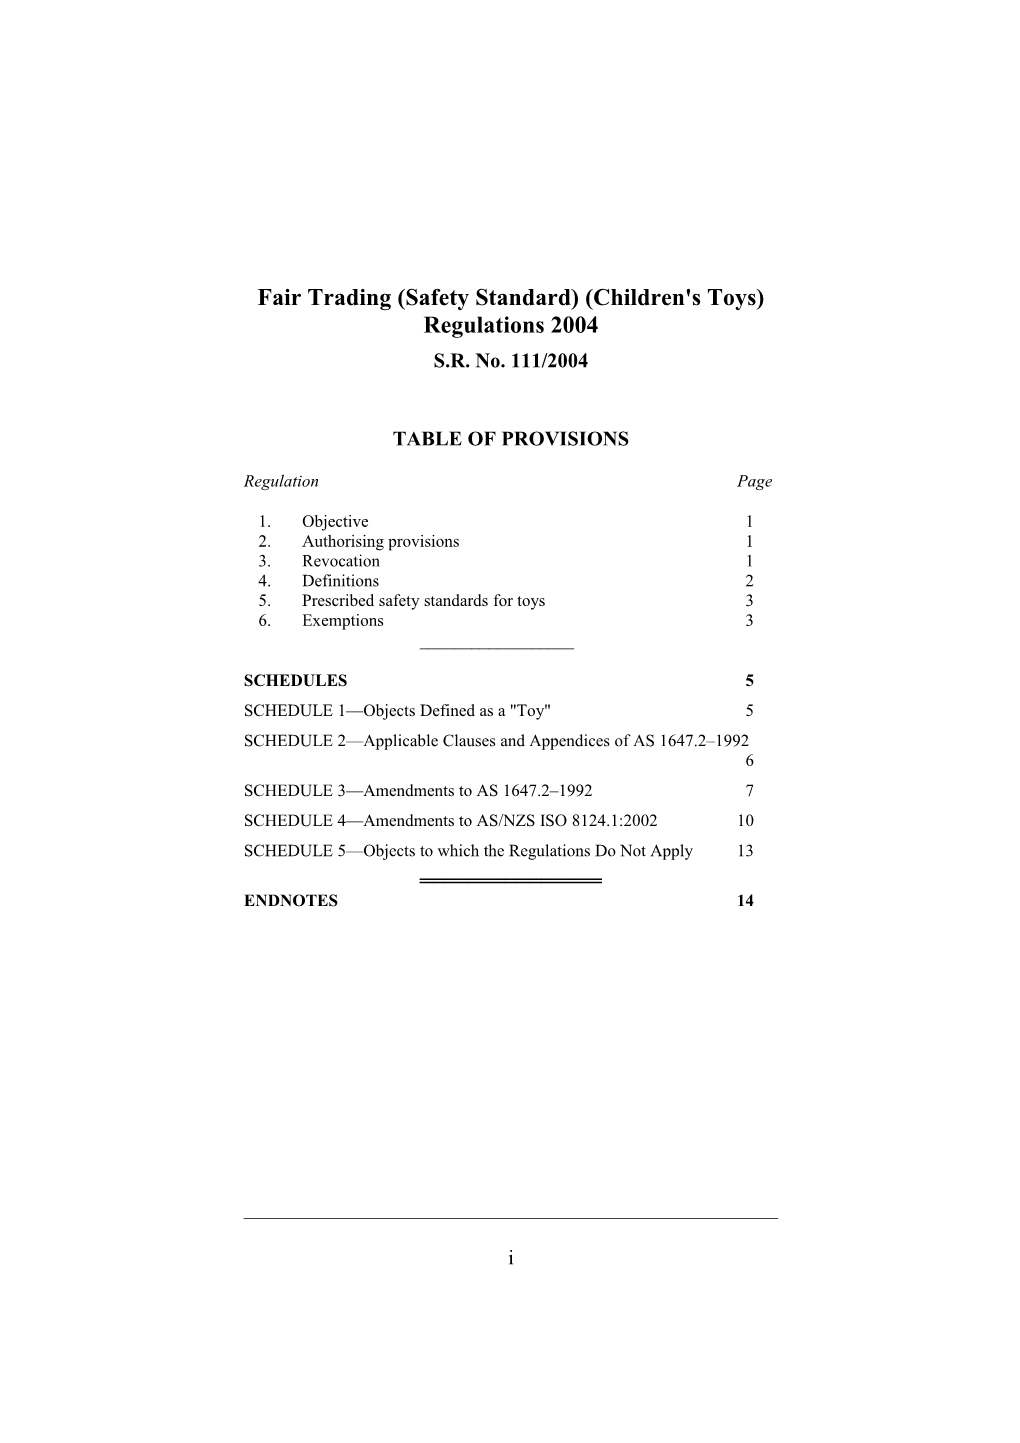 Fair Trading (Safety Standard) (Children's Toys) Regulations 2004